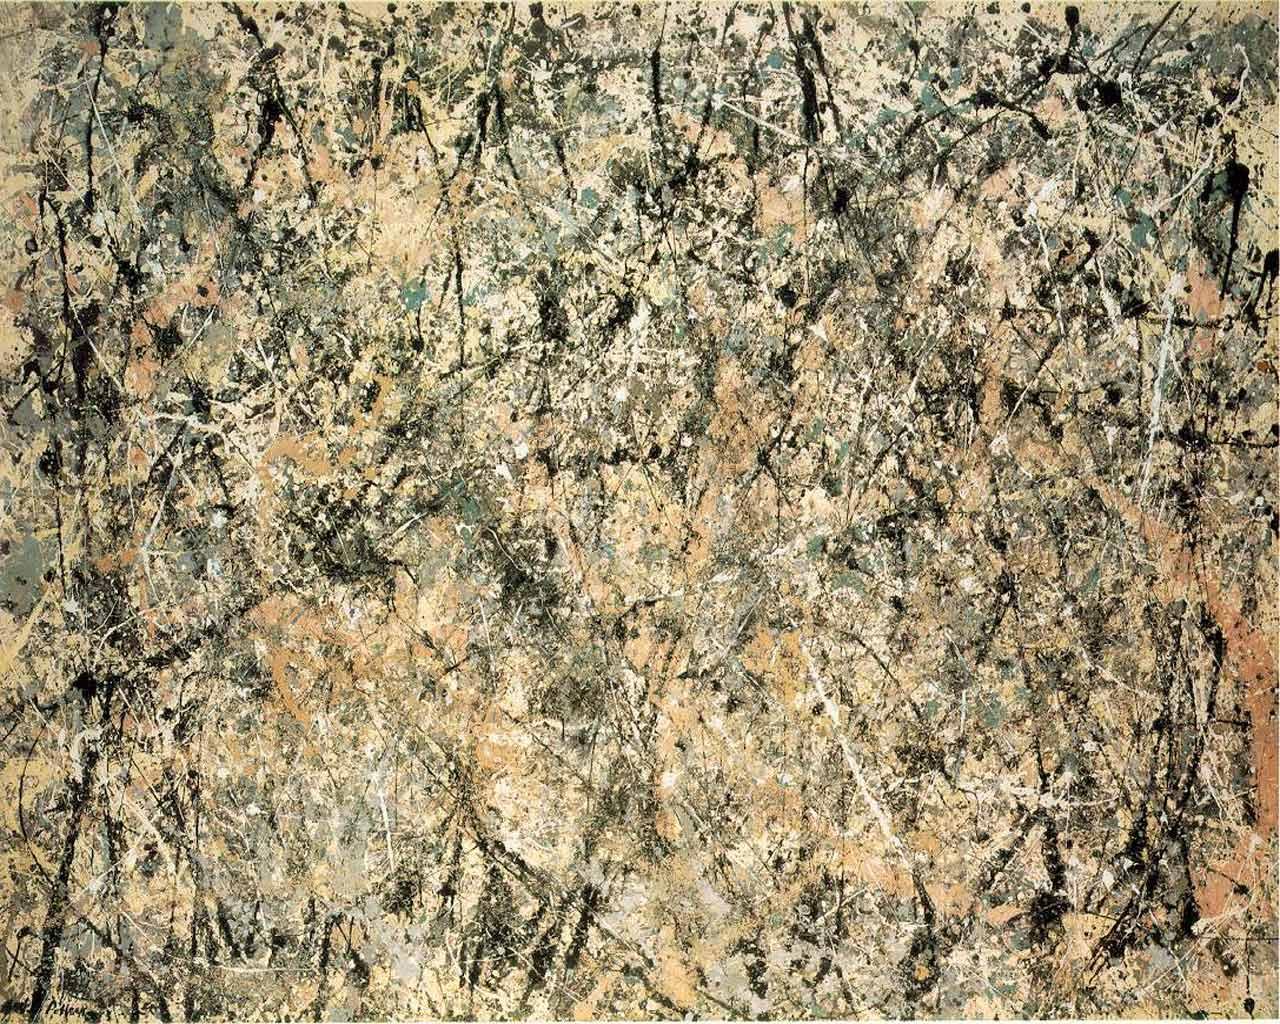 Jackson Pollock - Number 1 - Lavender Mist (1950) Wallpaper #4 1280 x 1024 